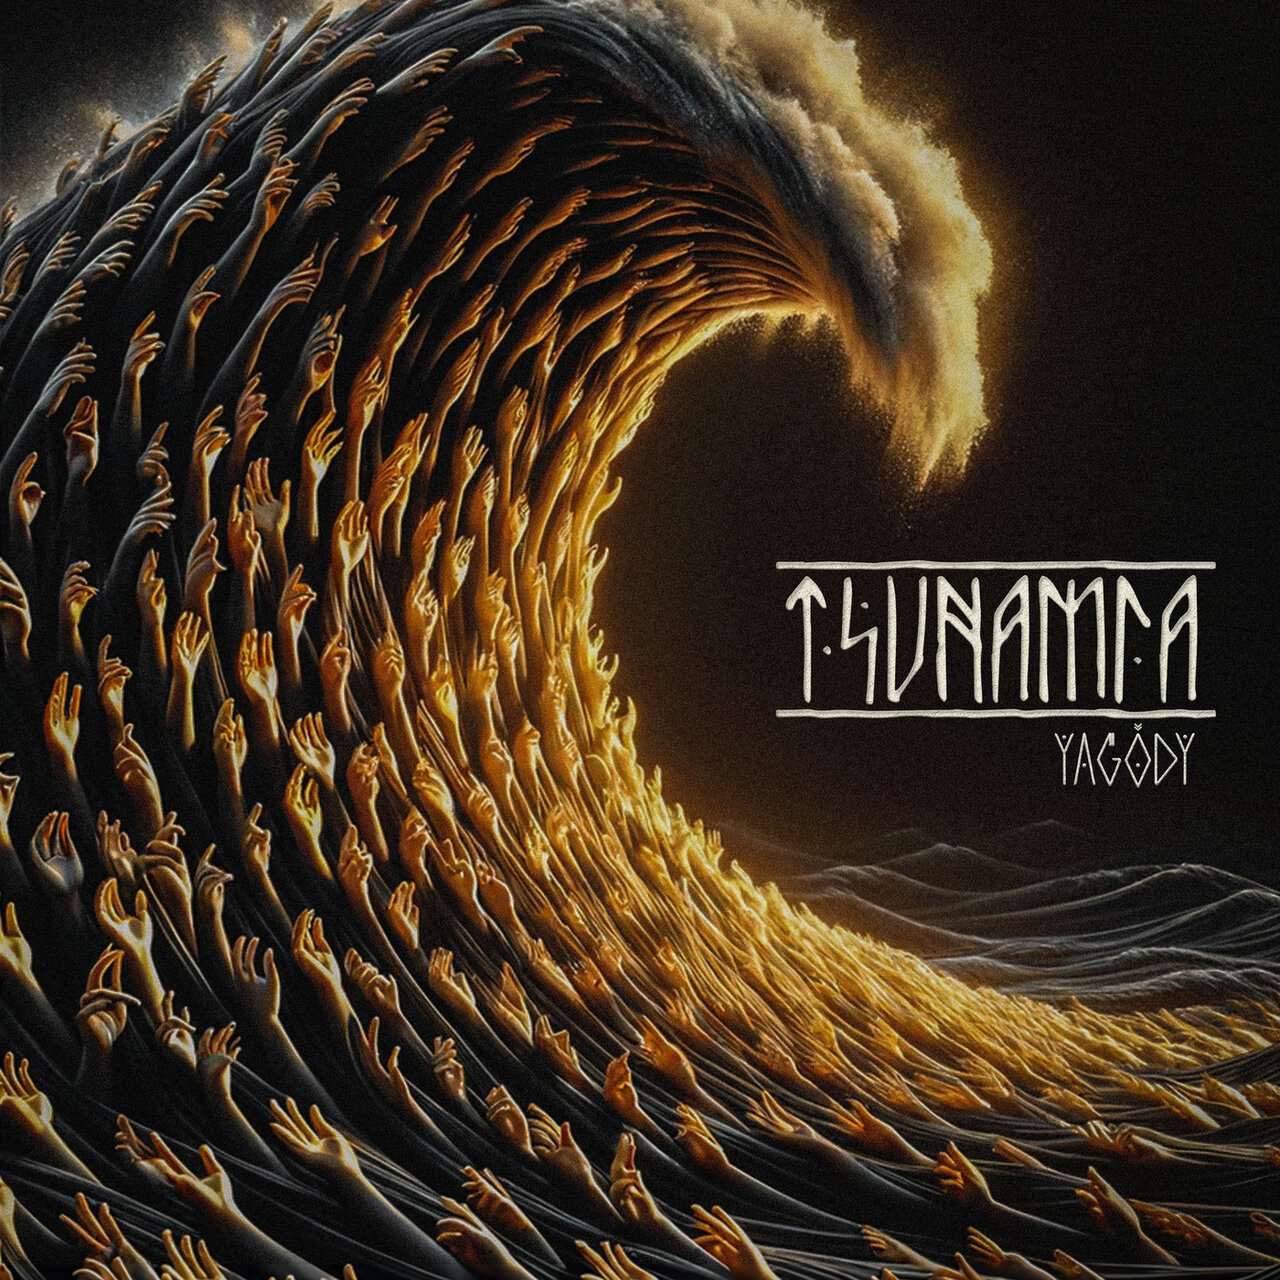 YAGODY Tsunamia cover artwork